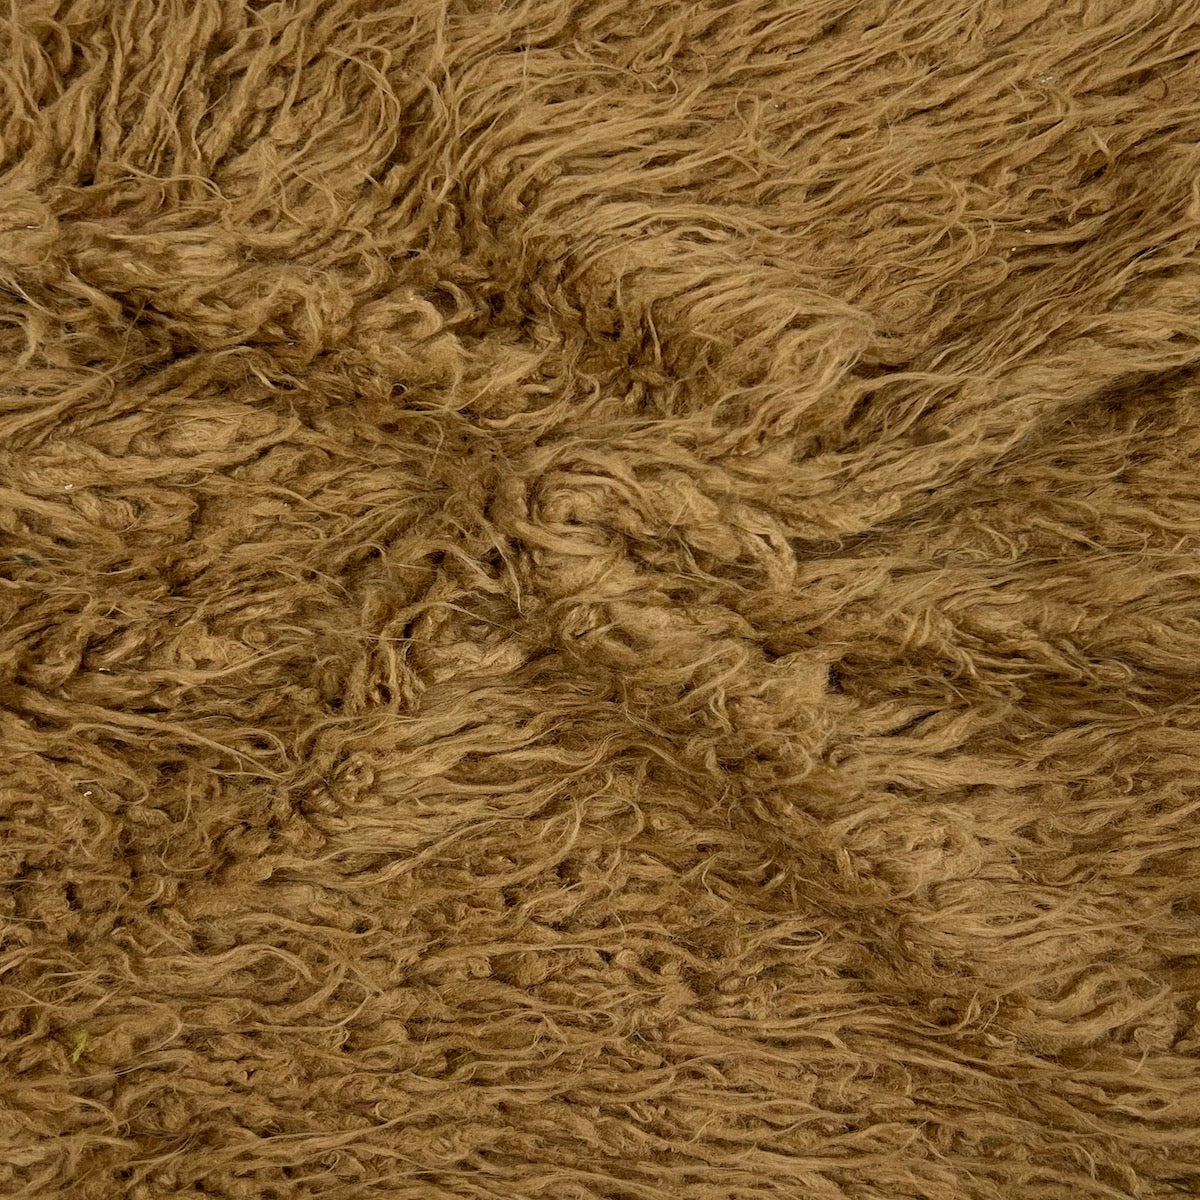 Tela de piel sintética rizada de pelo largo de alpaca marrón caramelo 